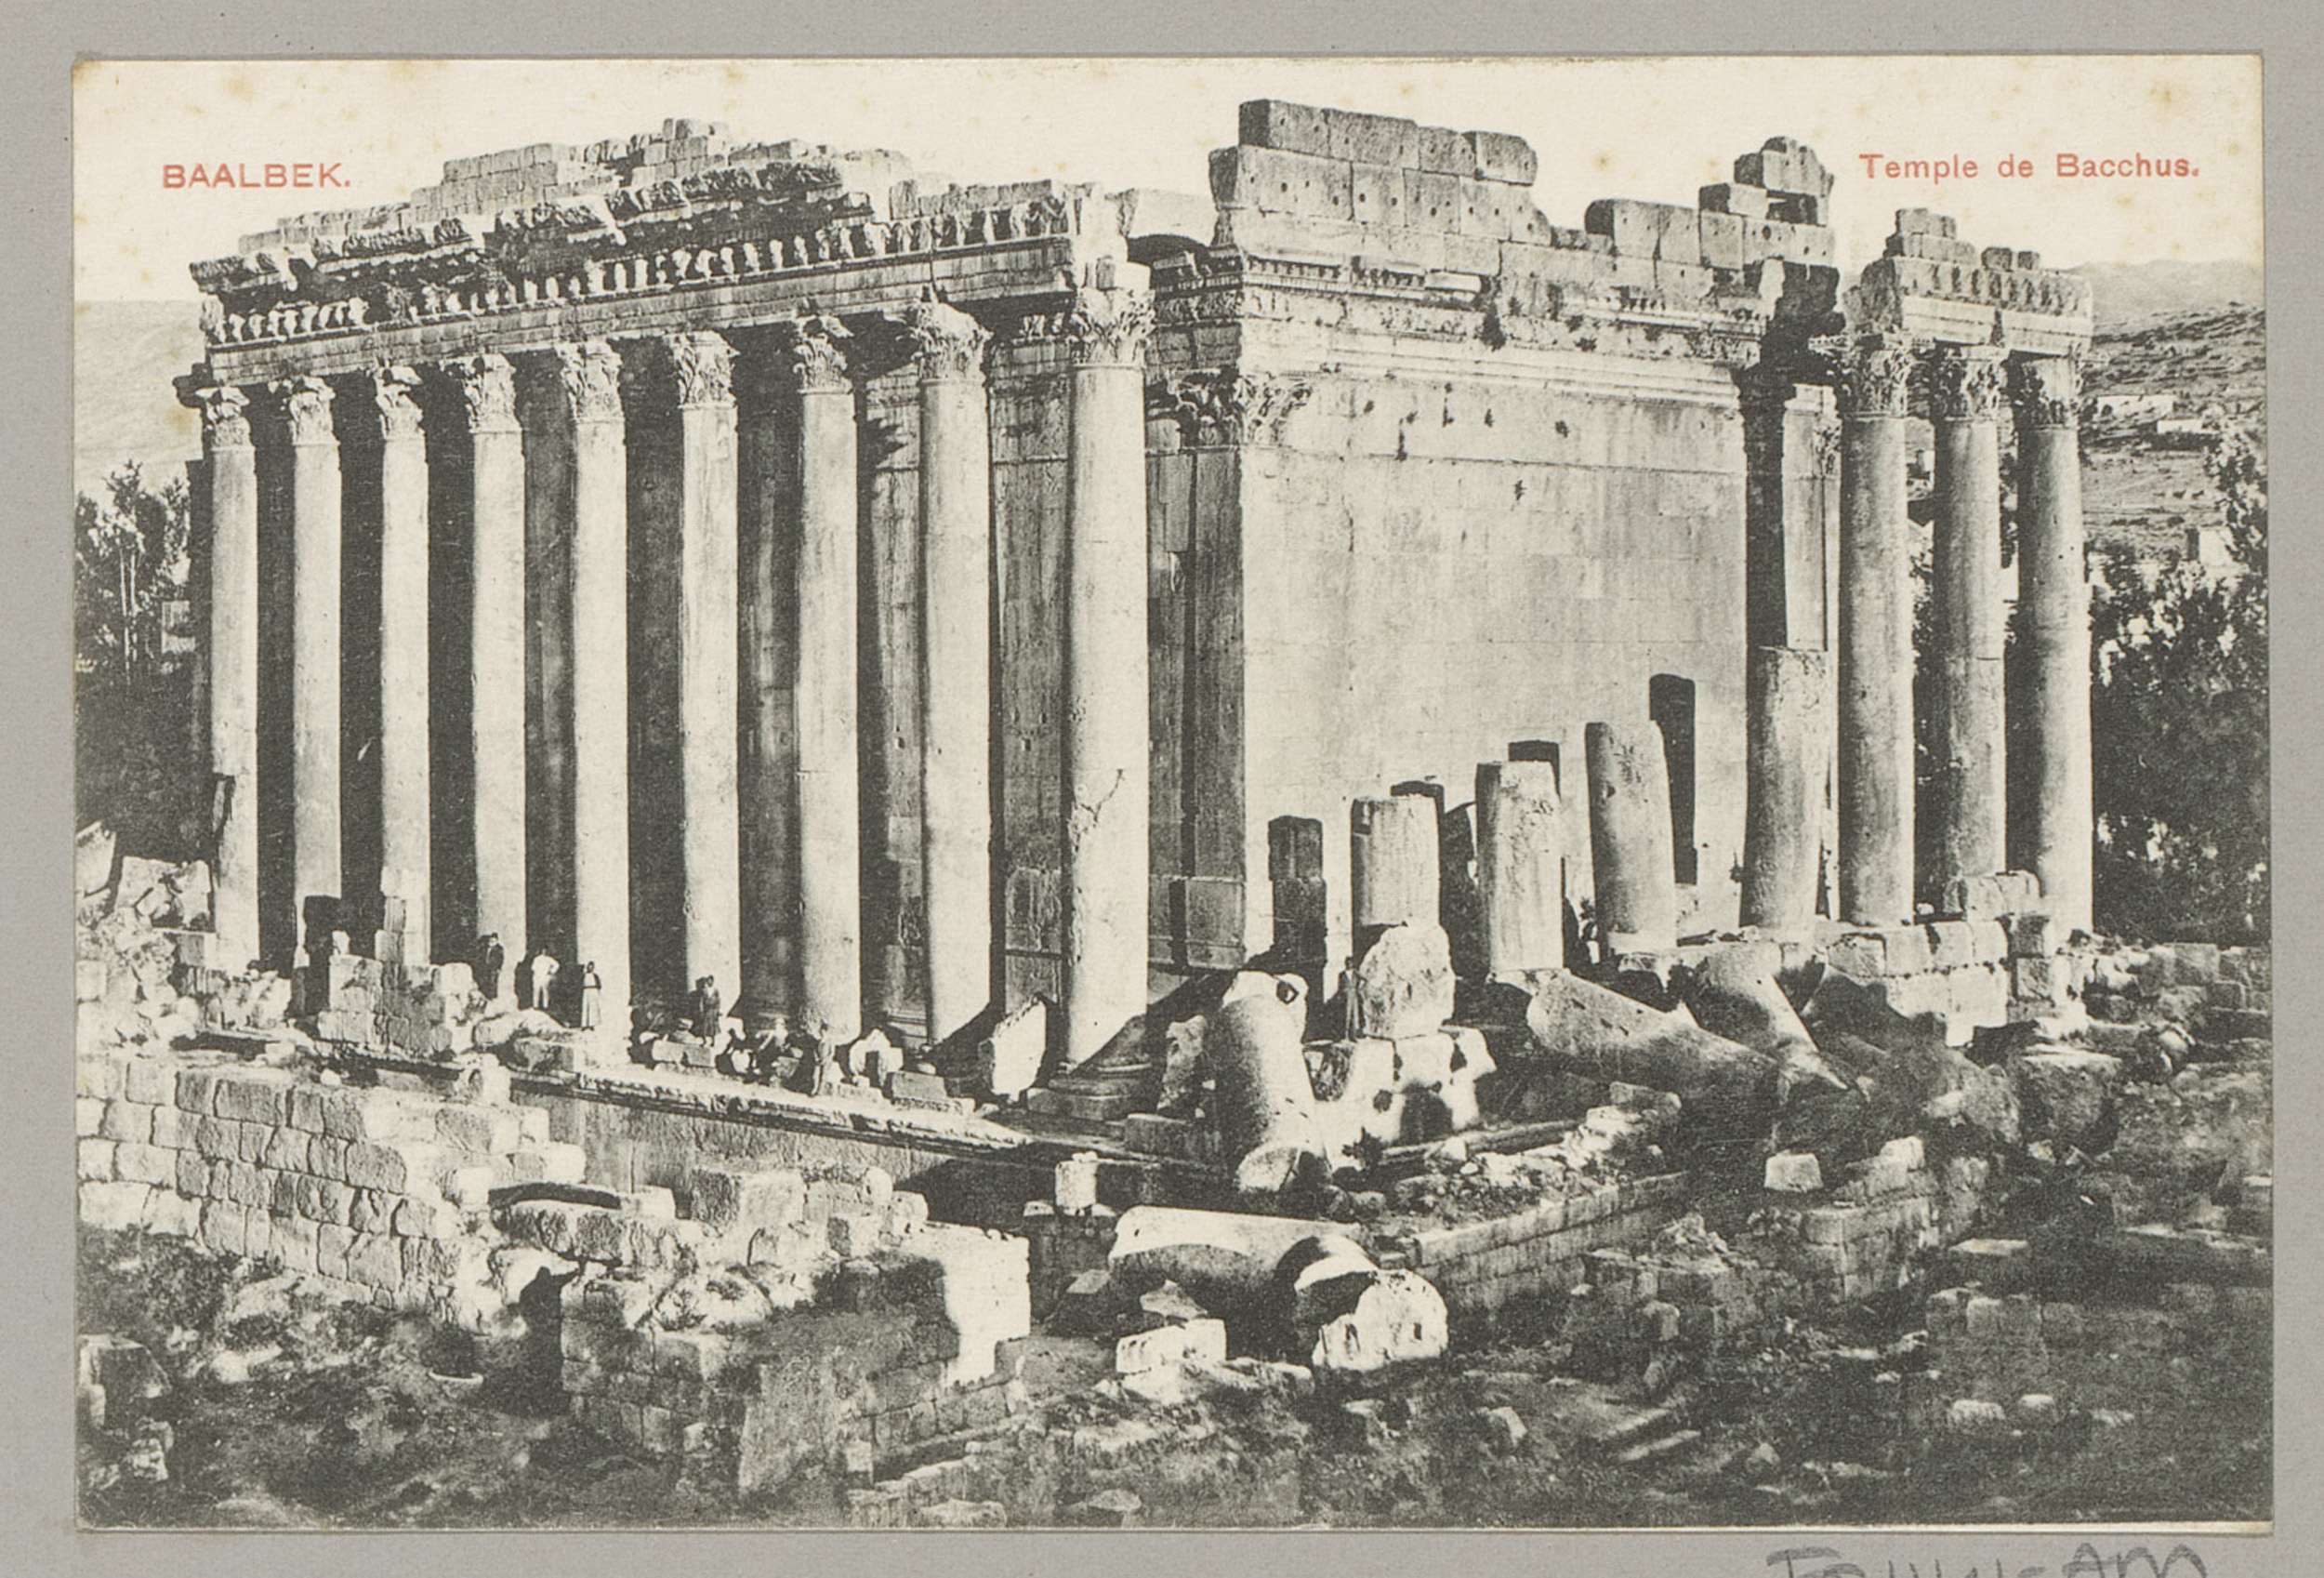 Baalbek. Temple de Bacchus, Tempel van Bacchus in Baalbek